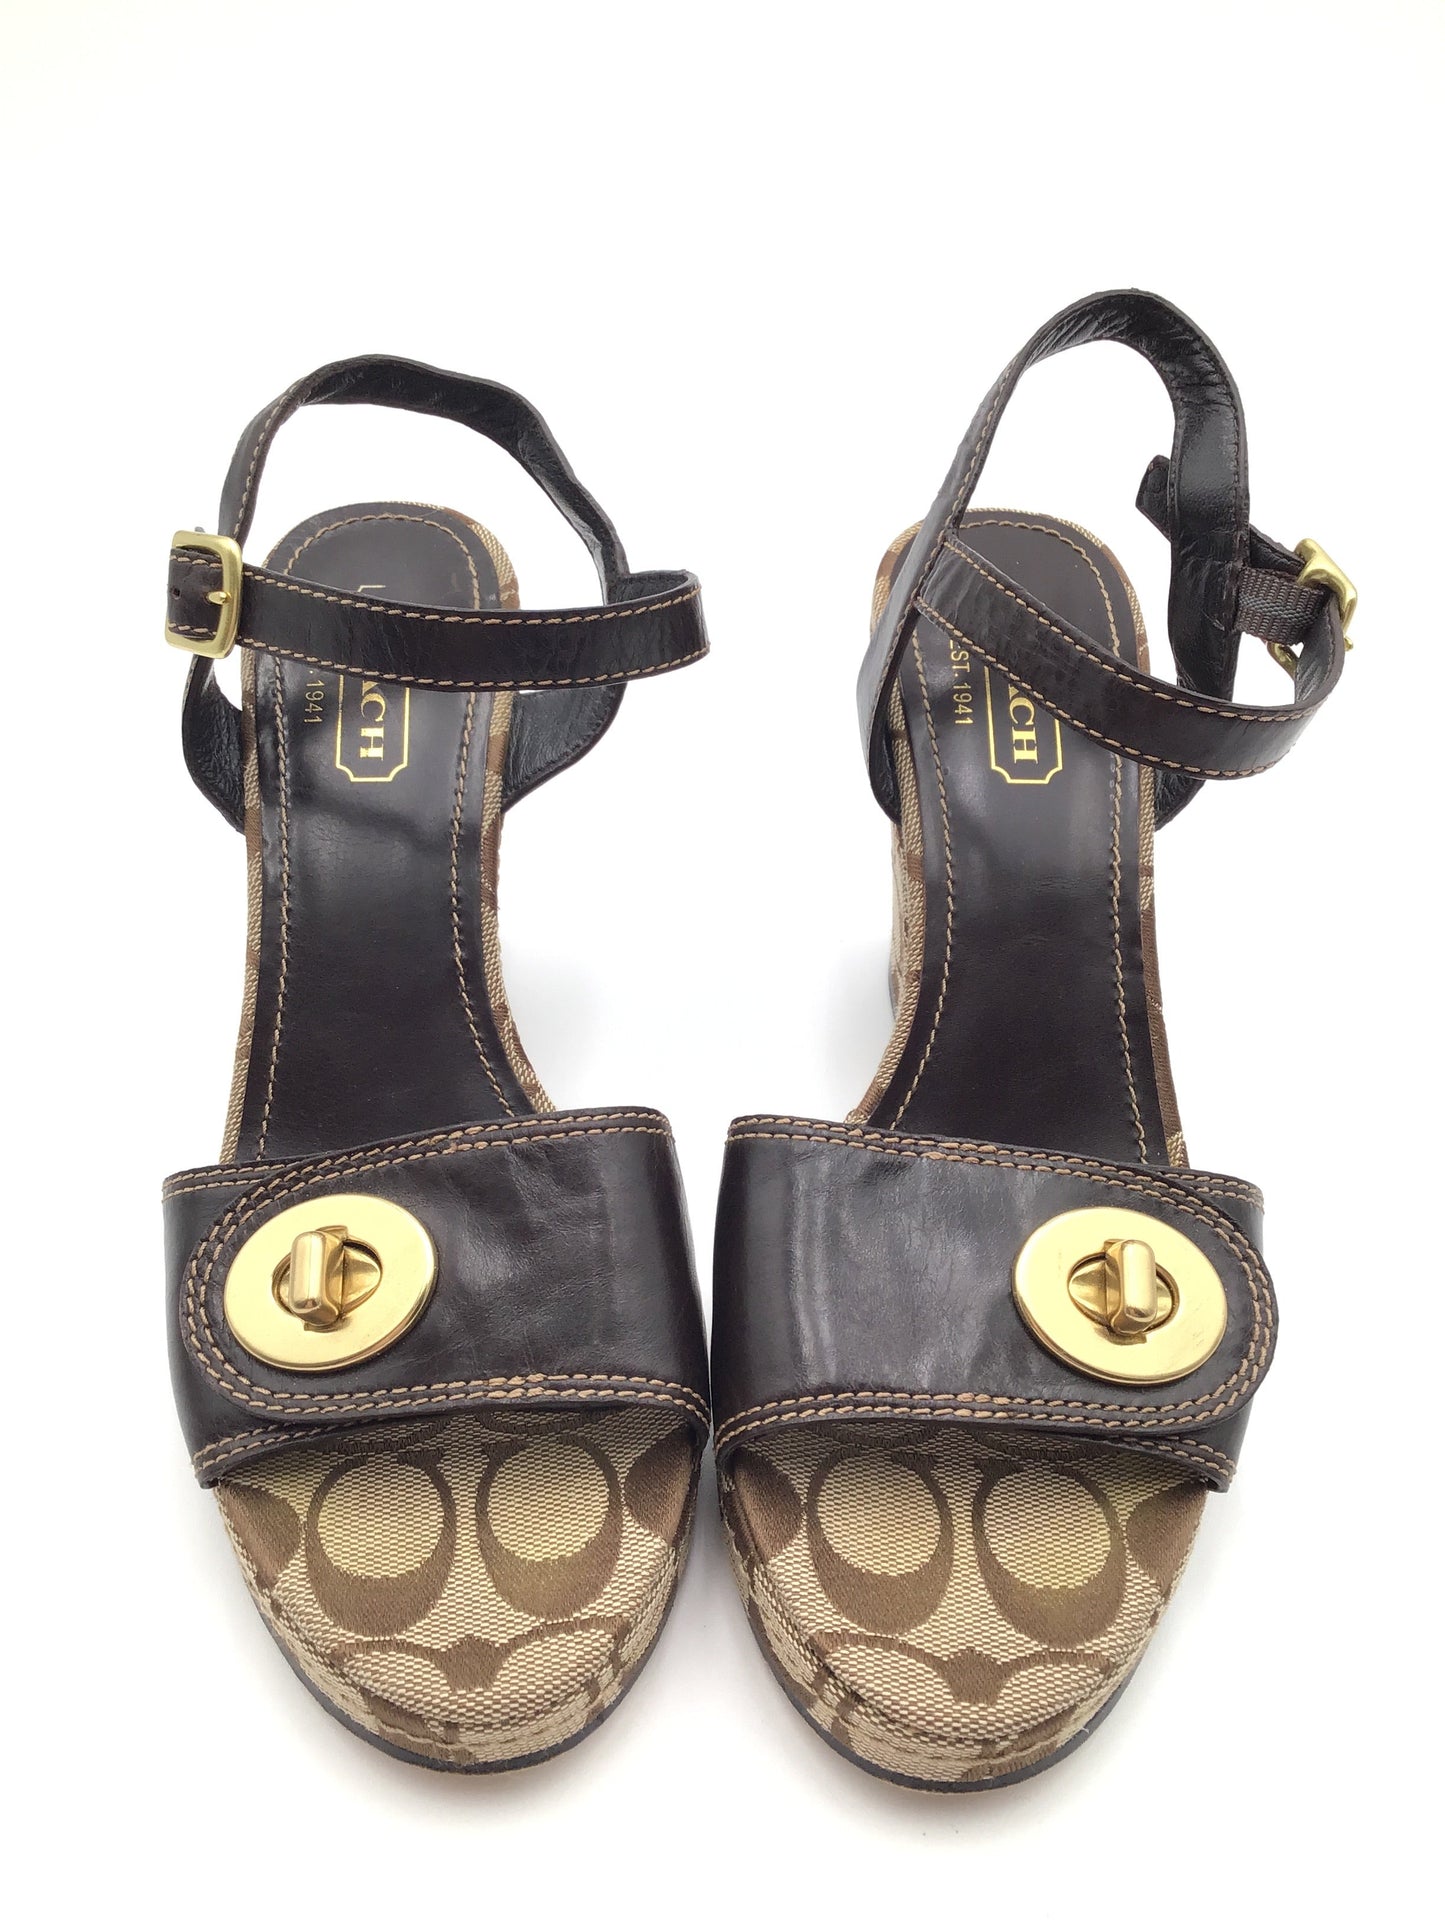 Brown & Cream Sandals Heels Wedge Coach, Size 7.5